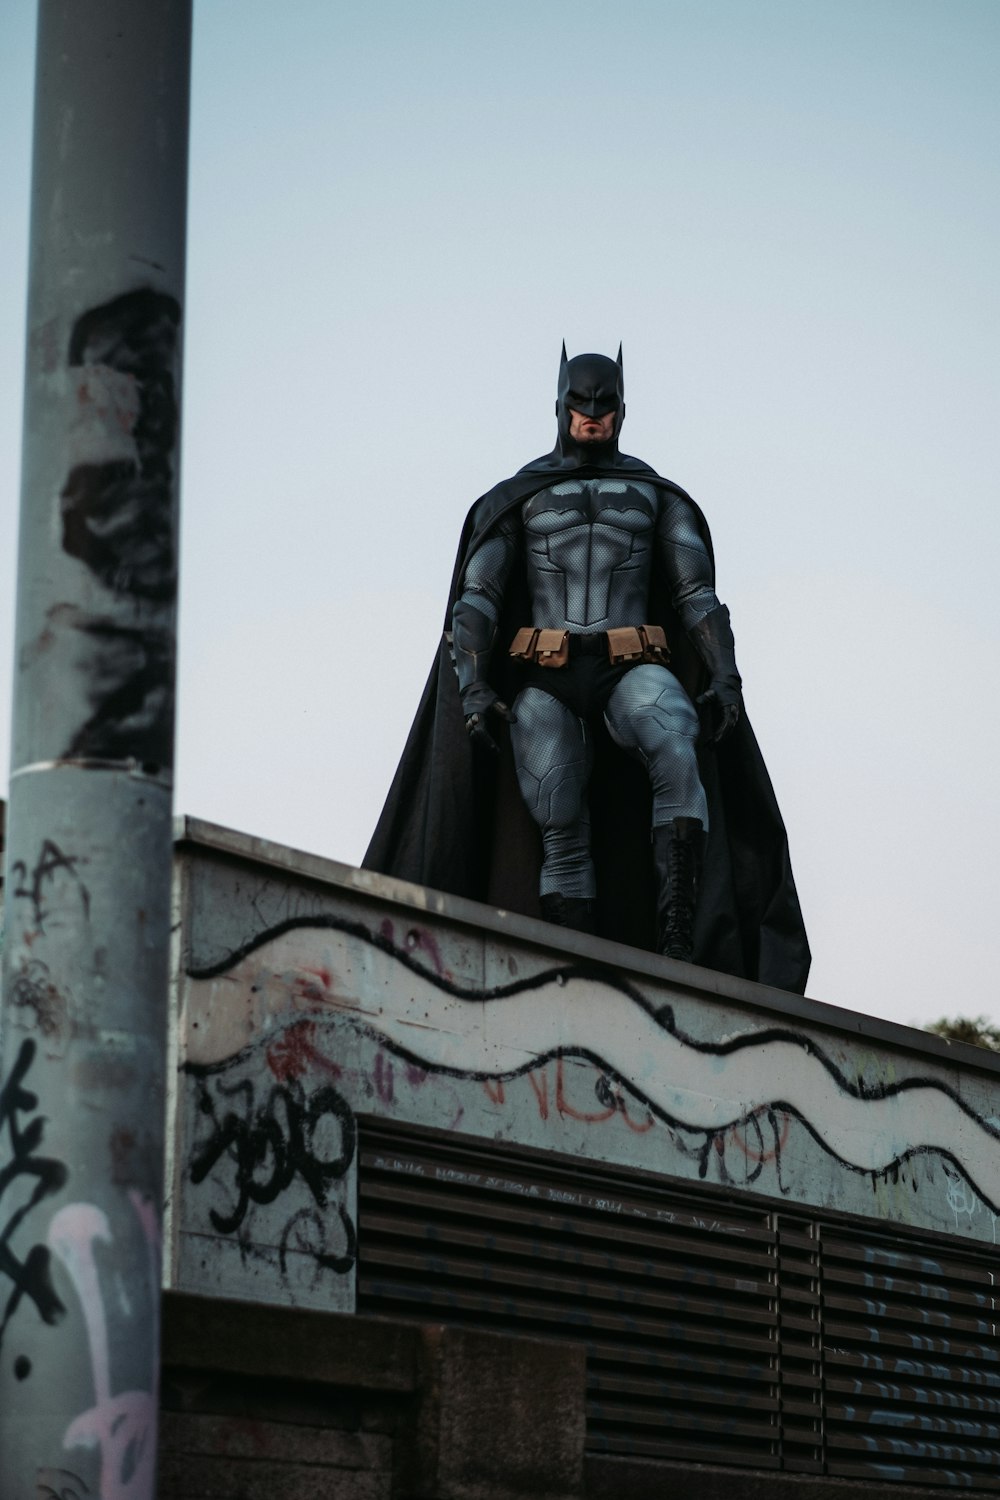 Batman Wallpaper Pictures  Download Free Images on Unsplash